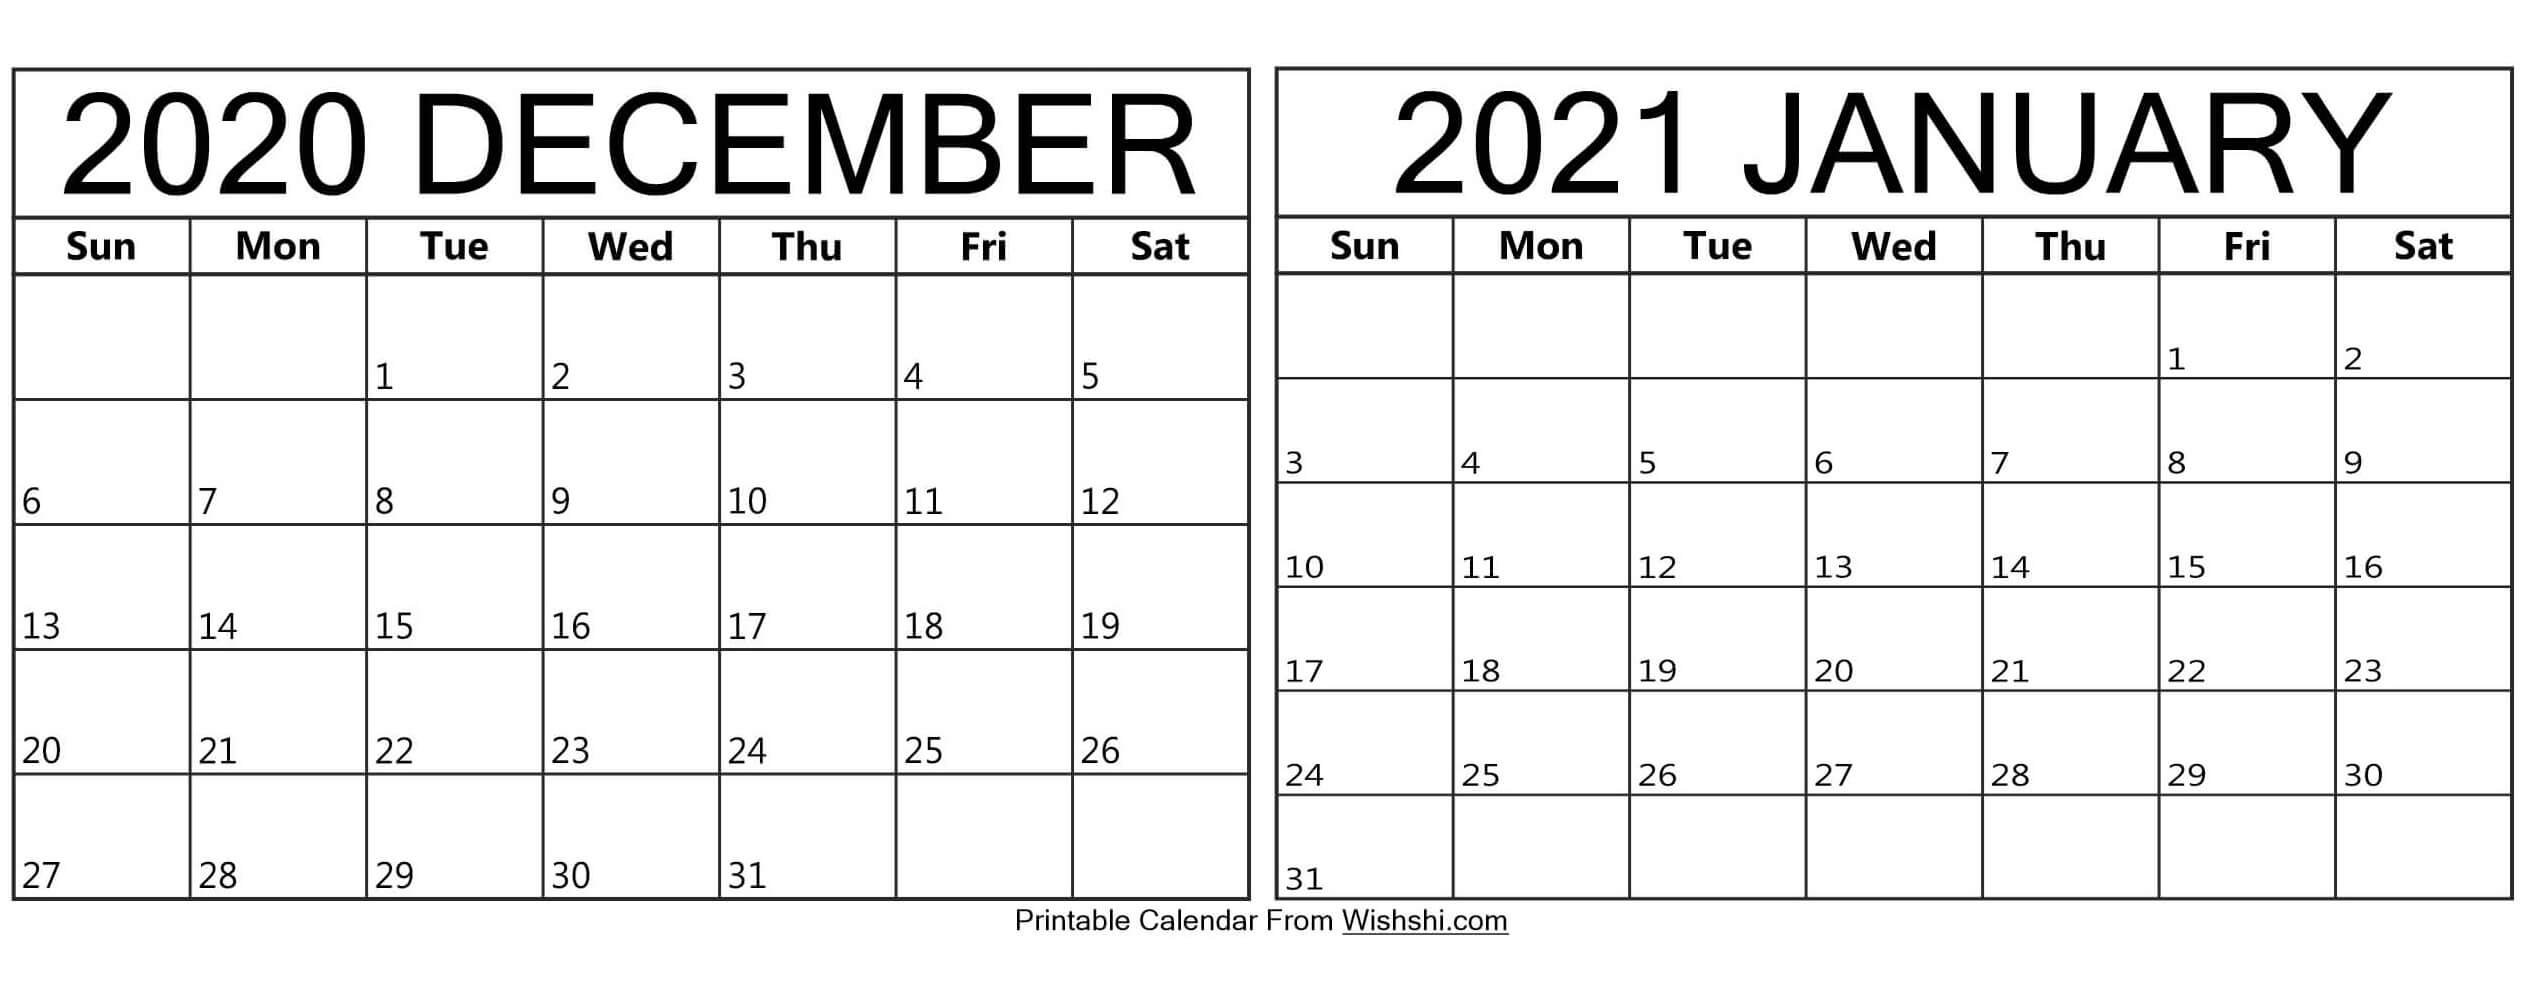 Printable December 2020 January 2021 Calendar - Free